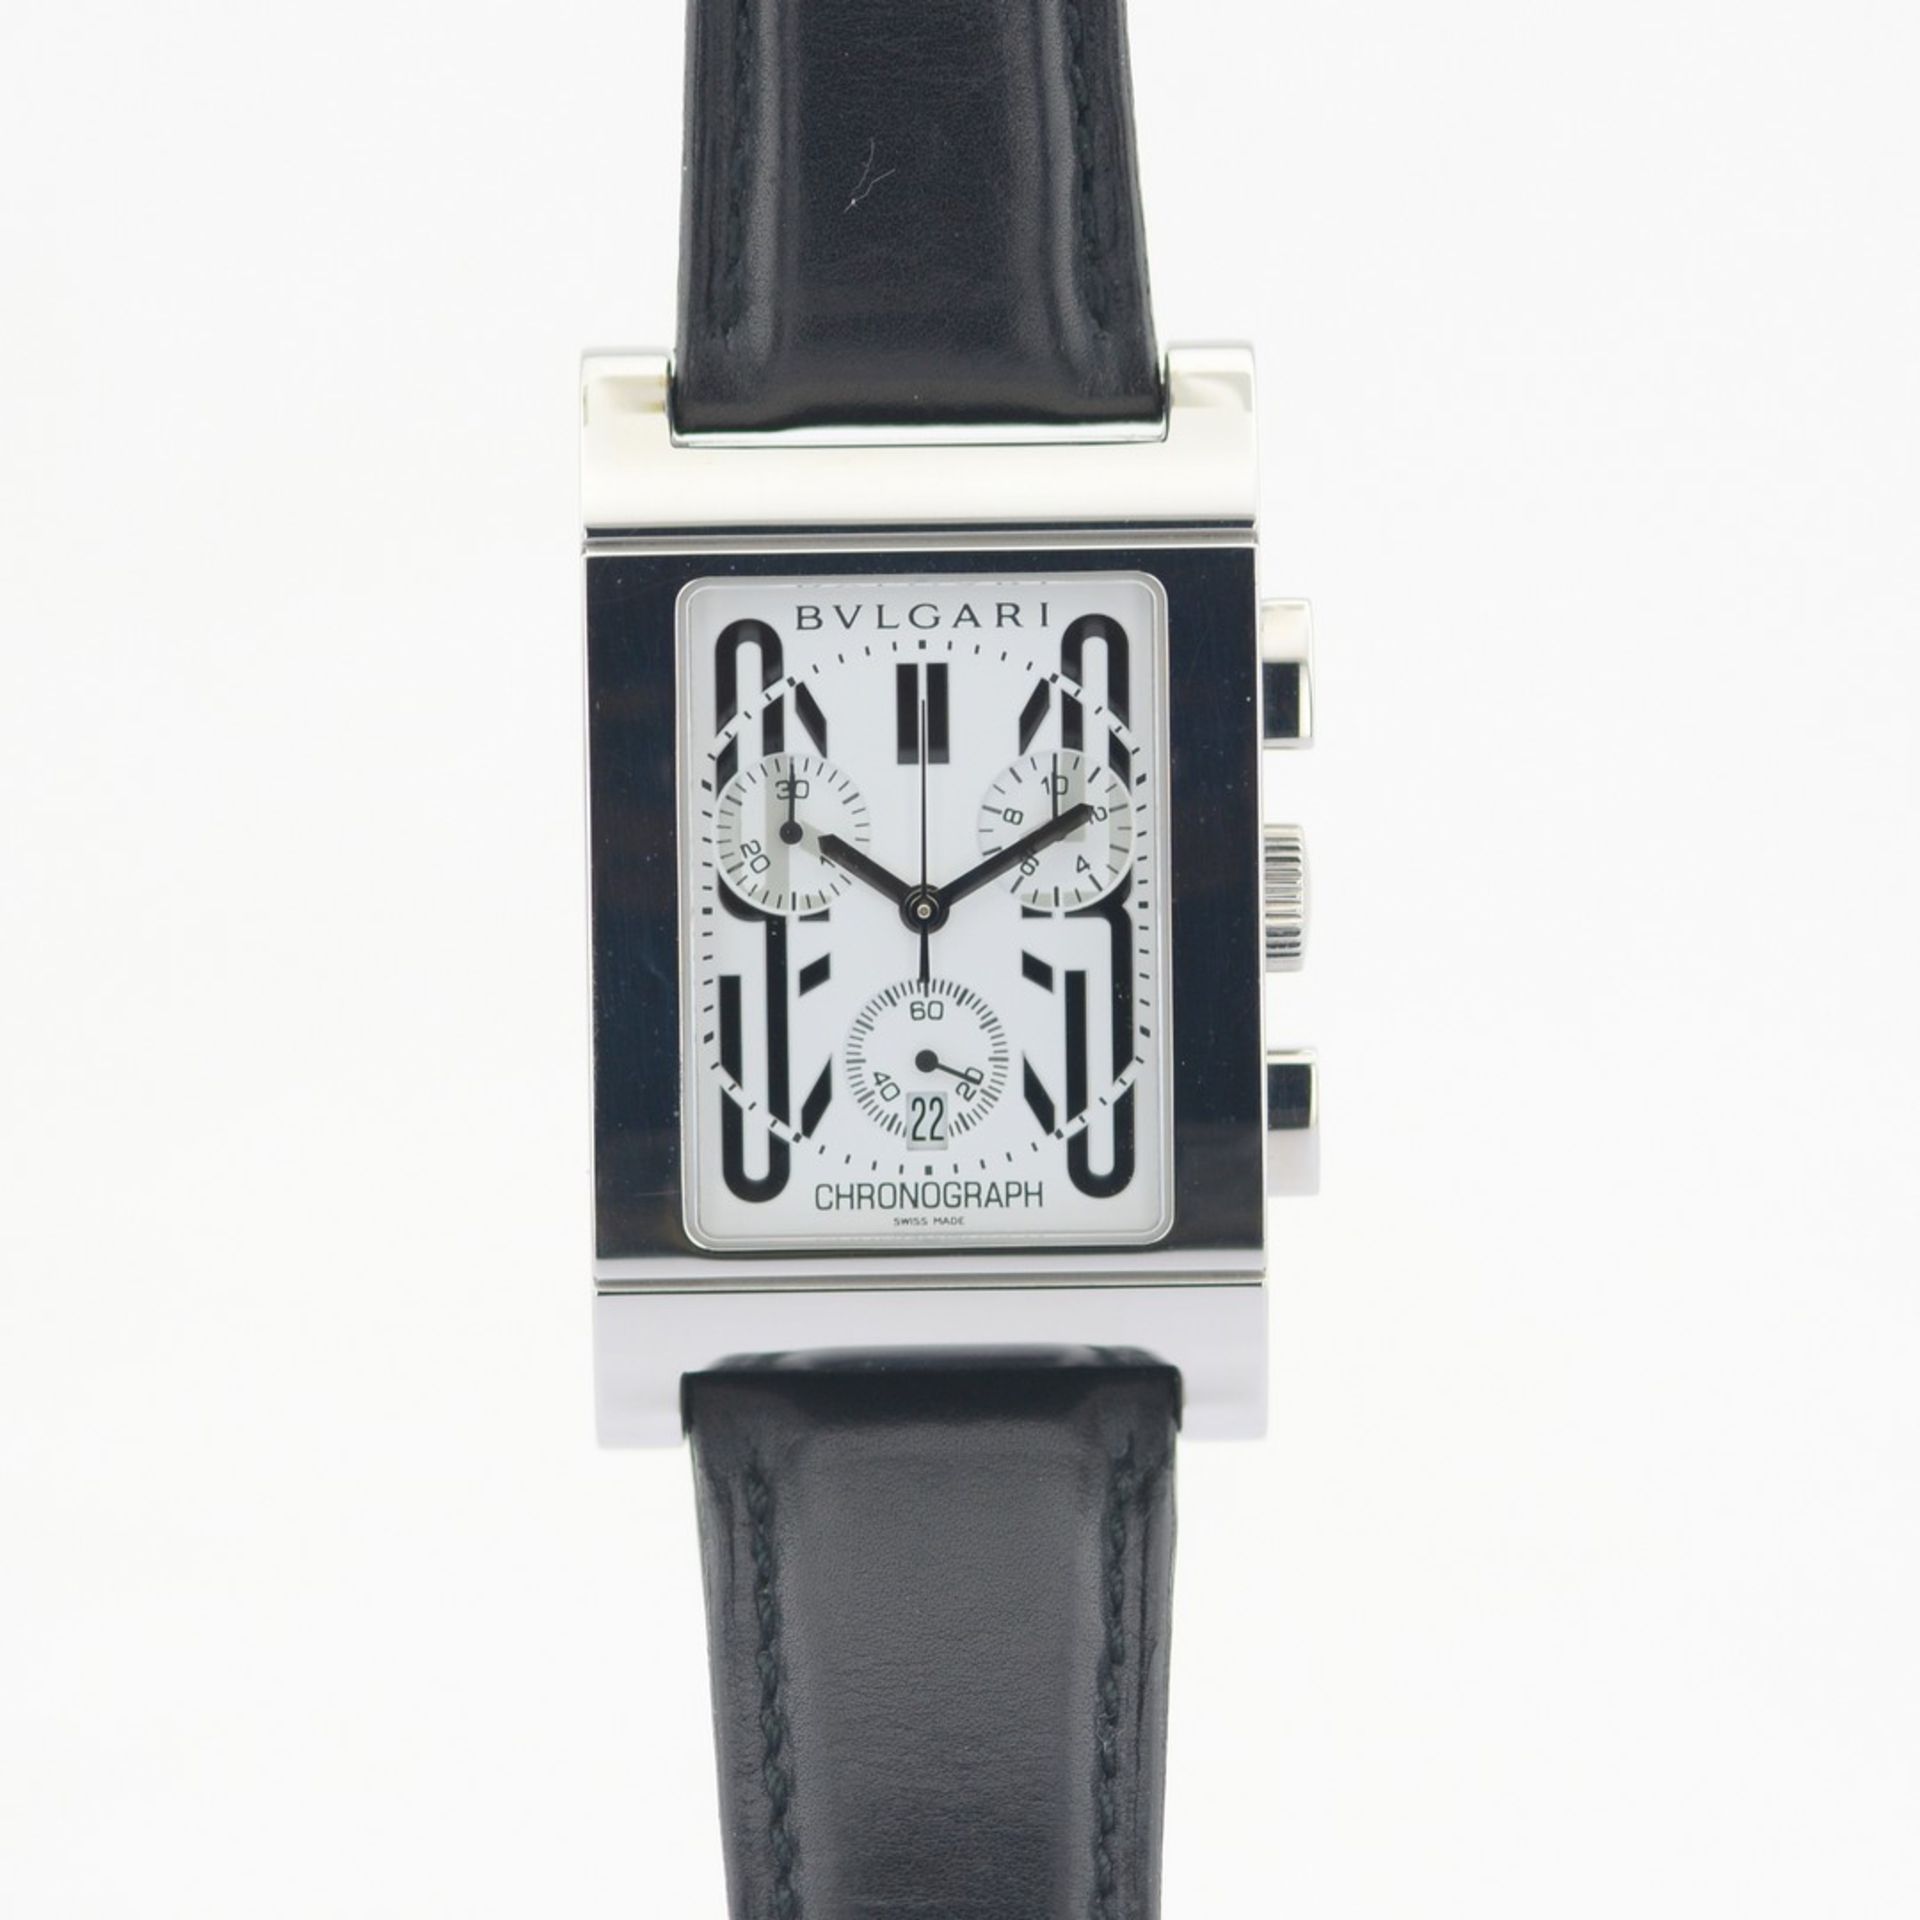 Bulgari / Unworn - Rettangolo Chronograph RTC 49 S - Gentlemen's Steel Wrist Watch - Image 8 of 8